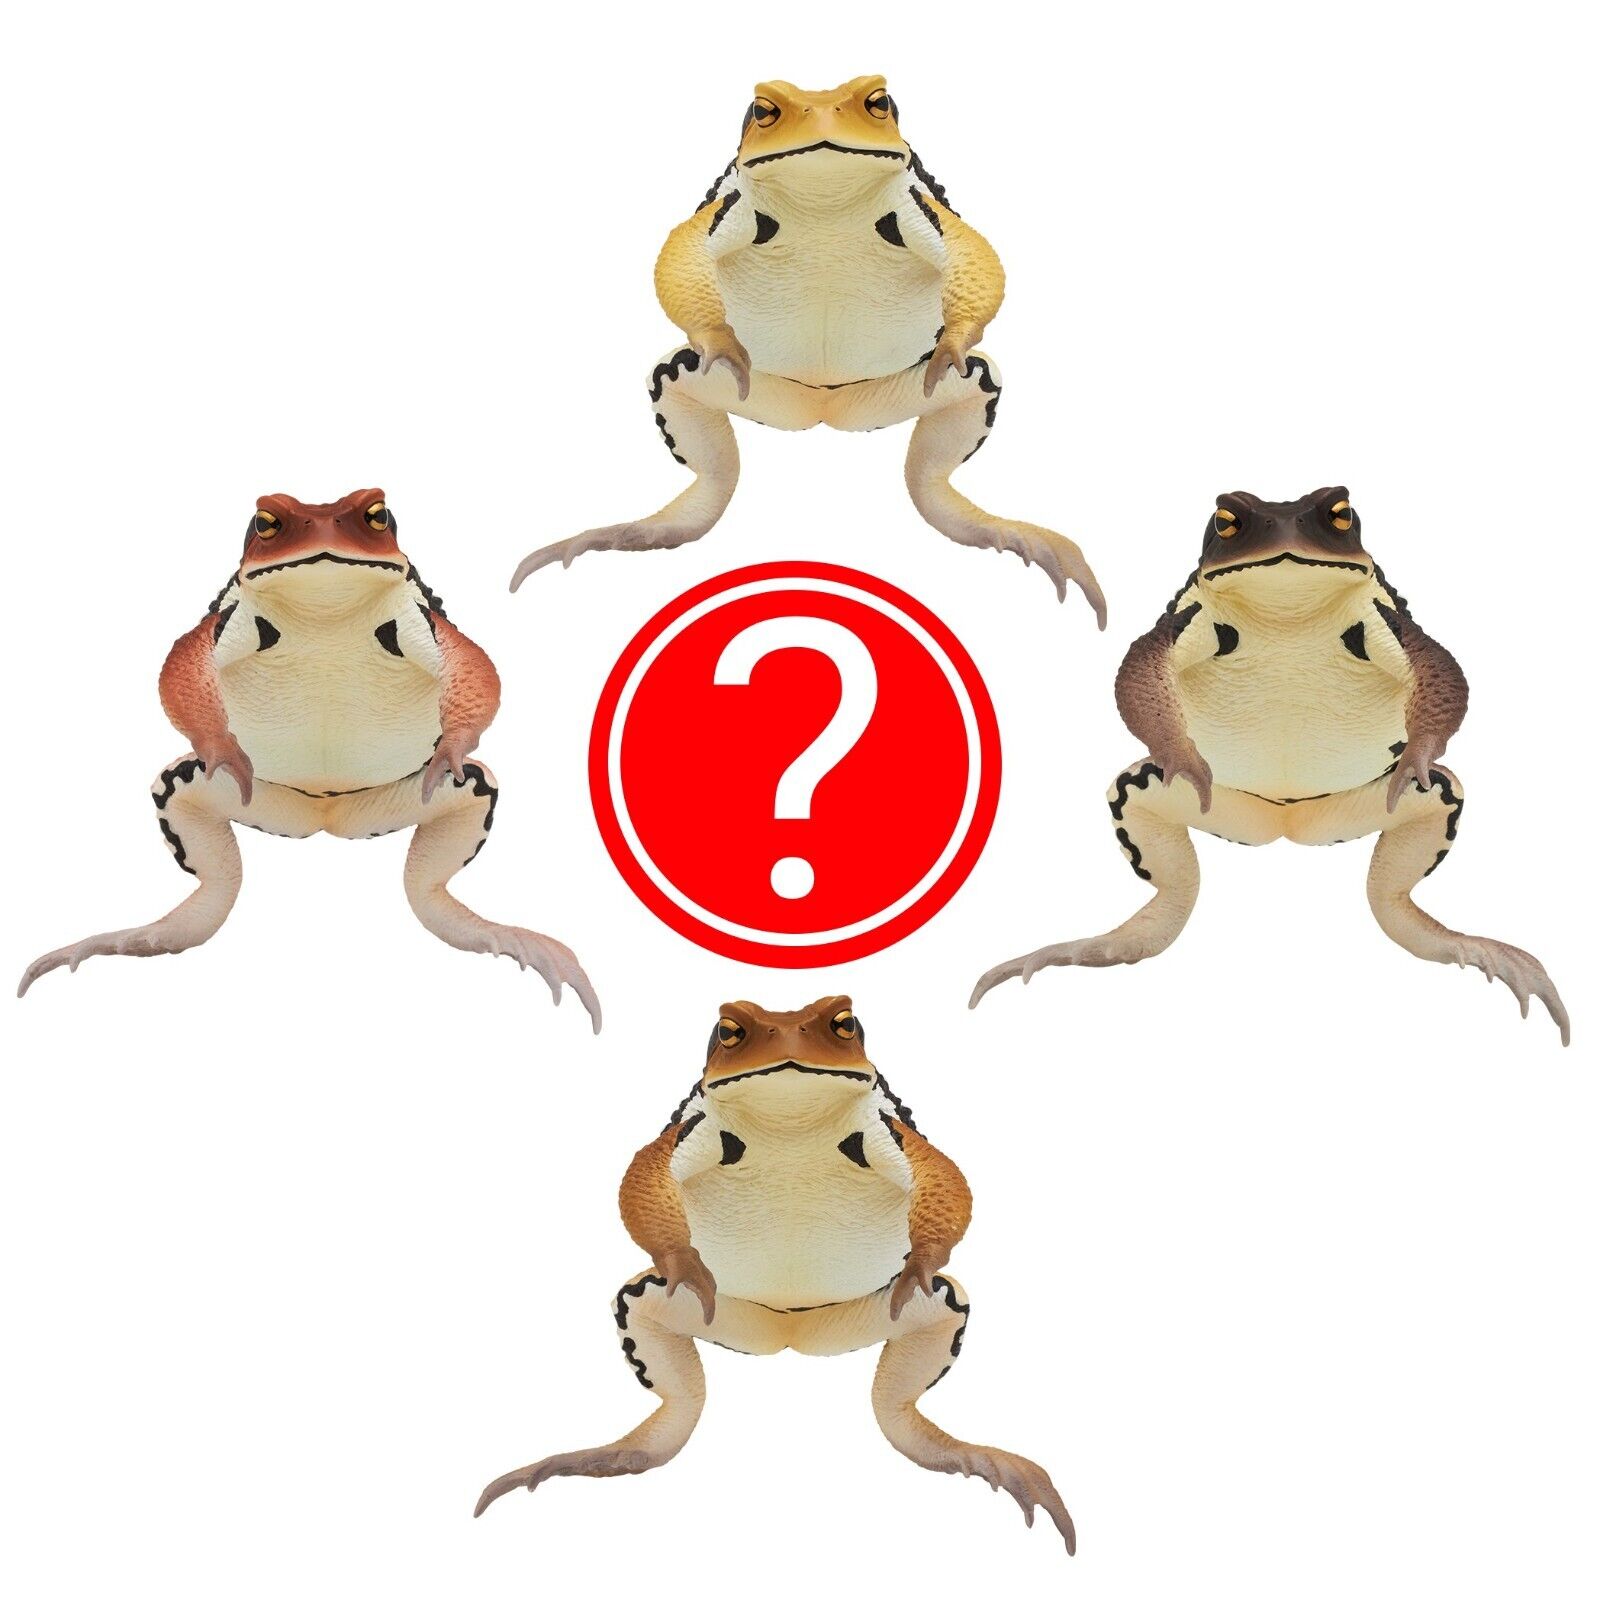 Toad Frog Figure Japan Collectible Blind Box Toy 1 Random Animal Gashapon Figure